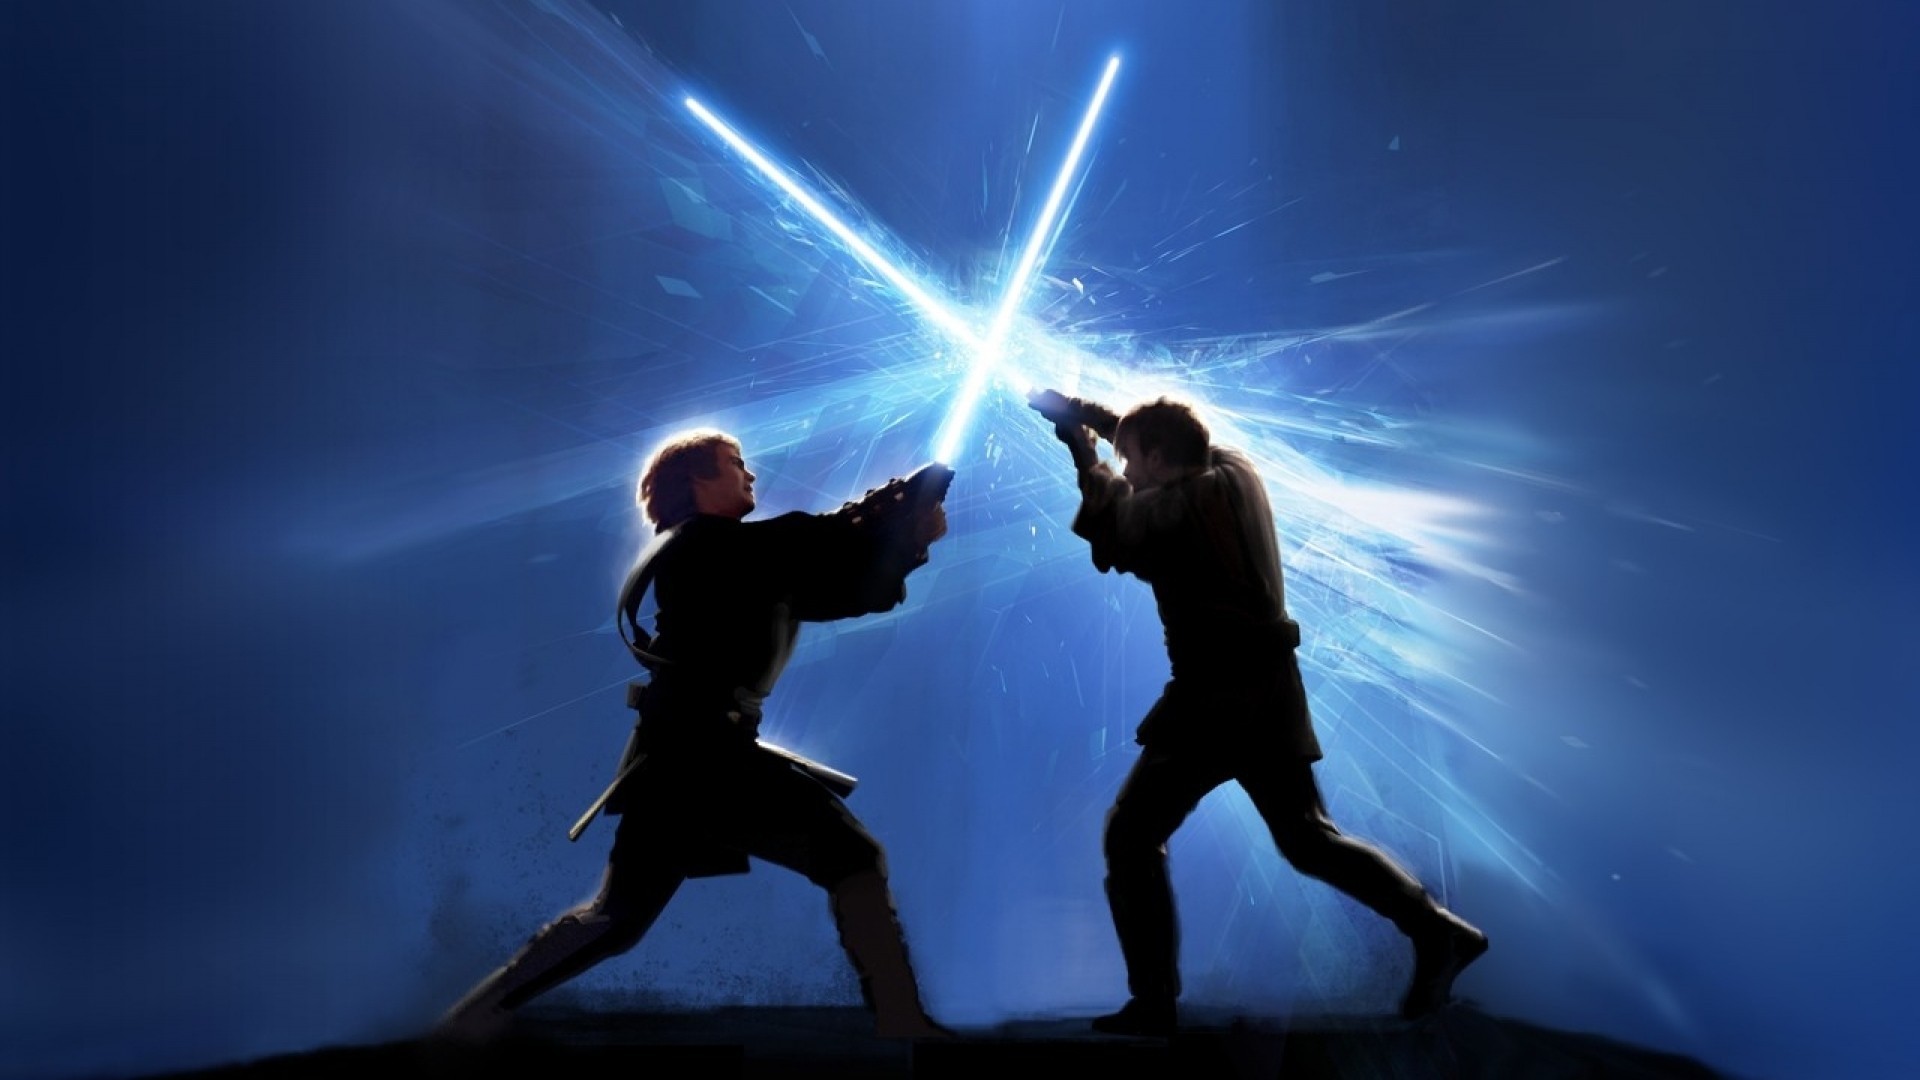 General 1920x1080 Jedi Sith Star Wars lightsaber Obi-Wan Kenobi Anakin Skywalker Star Wars: Episode III - The Revenge of the Sith Duel science fiction digital art